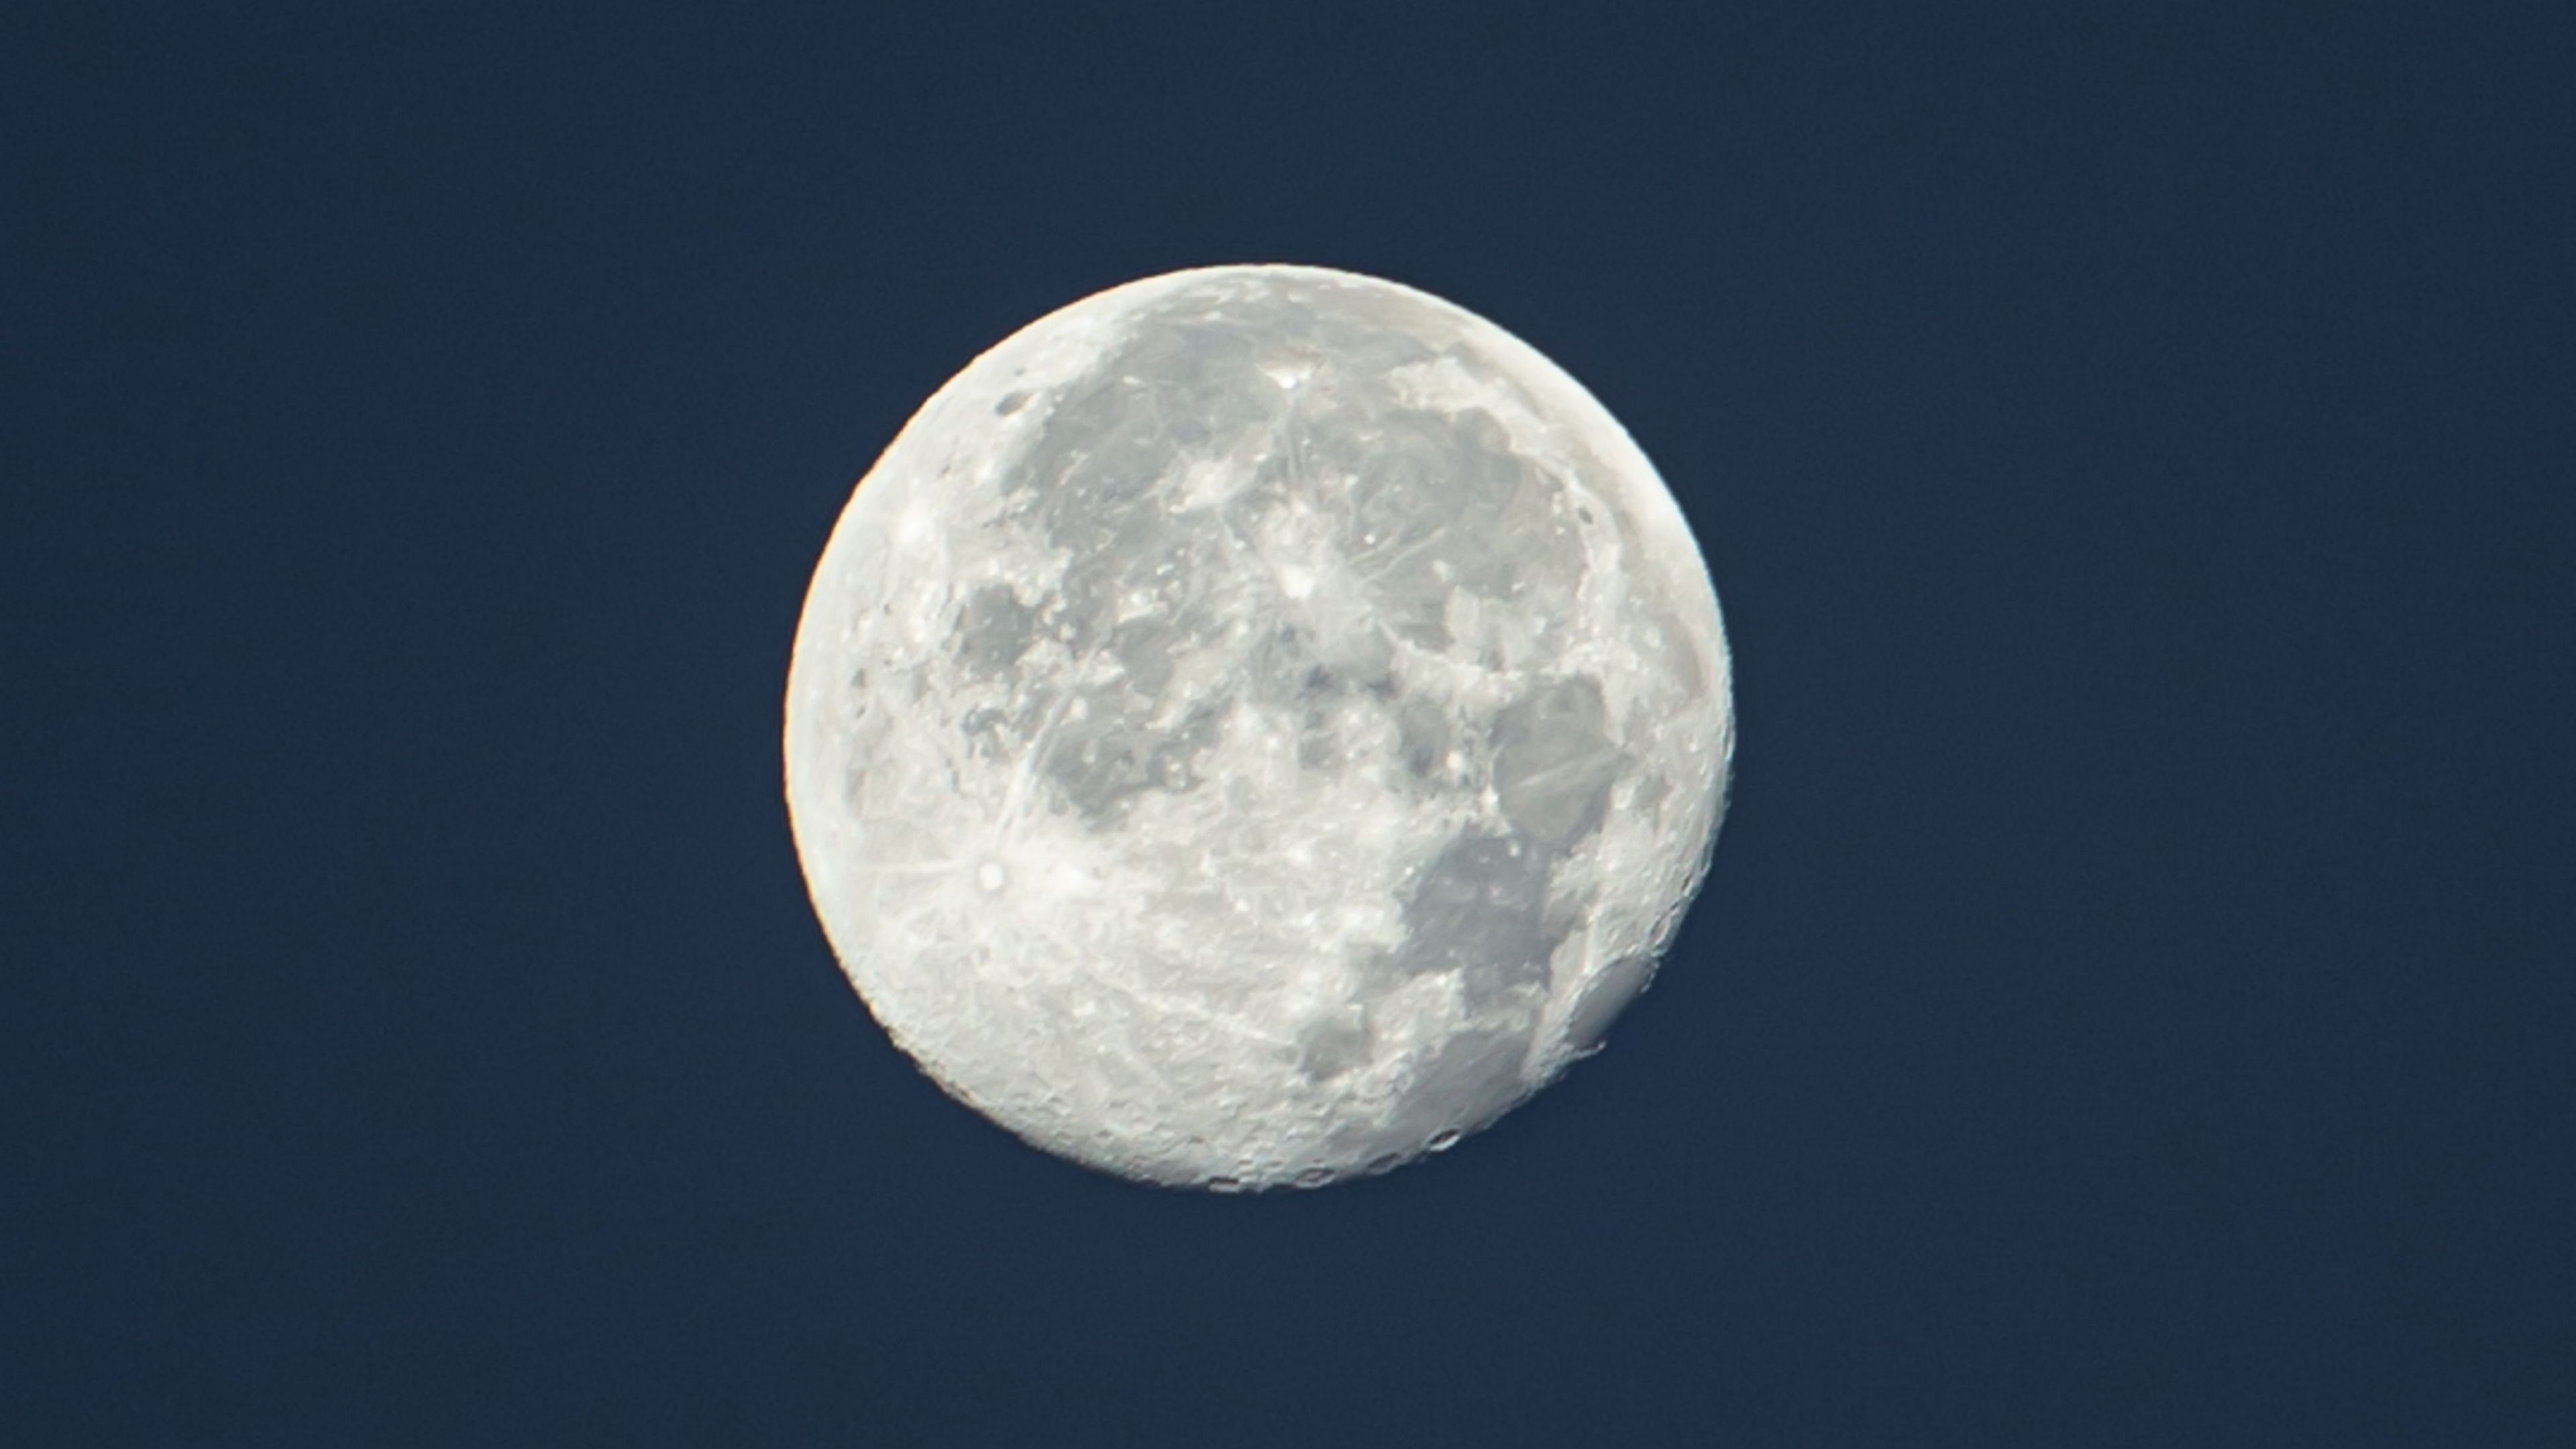 Download wallpaper 3840x2160 moon, full moon, sky, space 4k uhd 16:9 hd ...